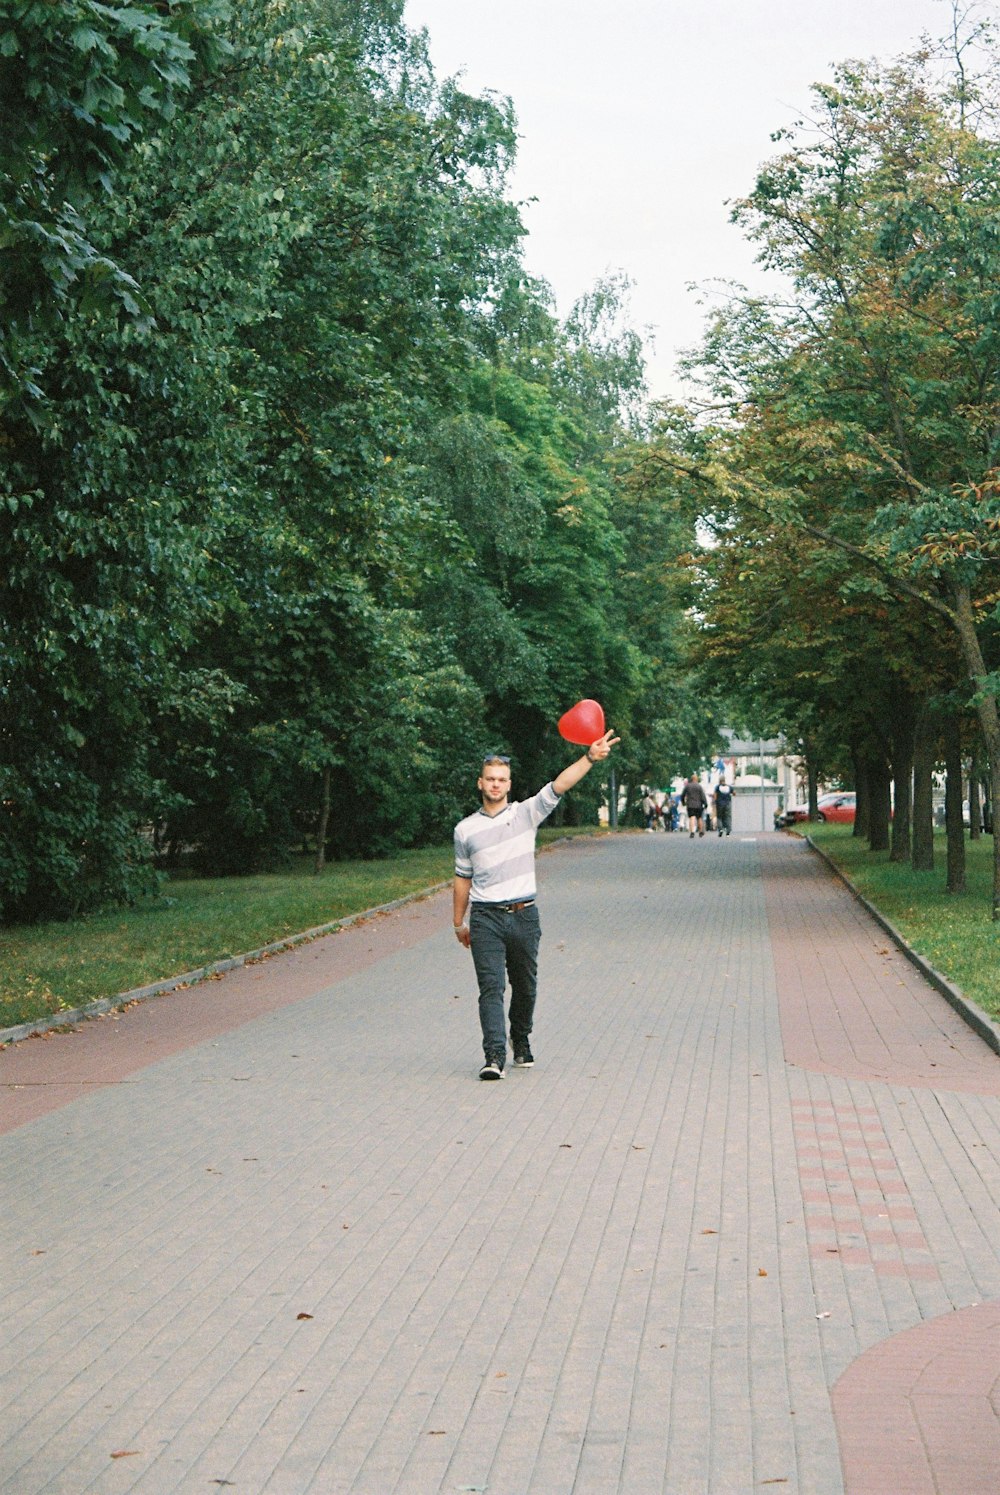 man in white shirt and black pants holding red ball walking on sidewalk during daytime